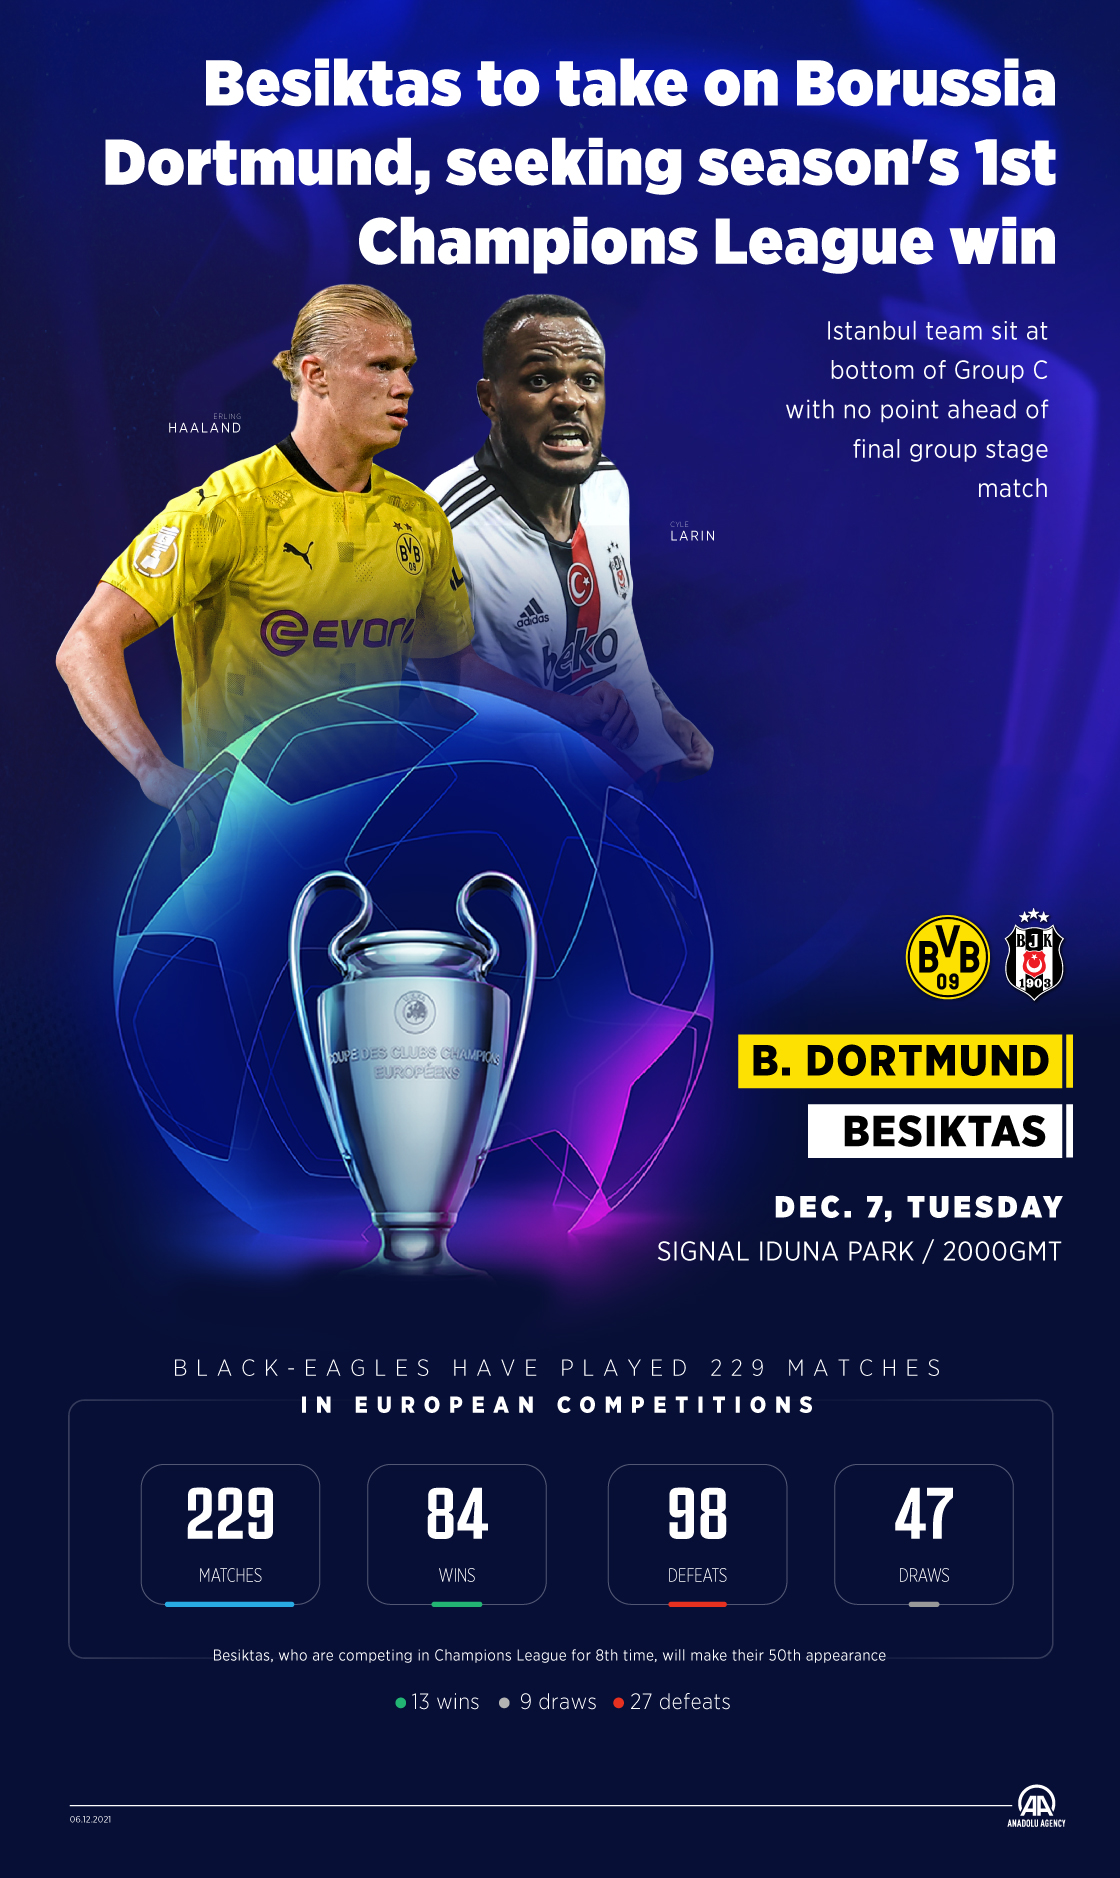 Besiktas to take on Borussia Dortmund, seeking season's 1st Champions League win